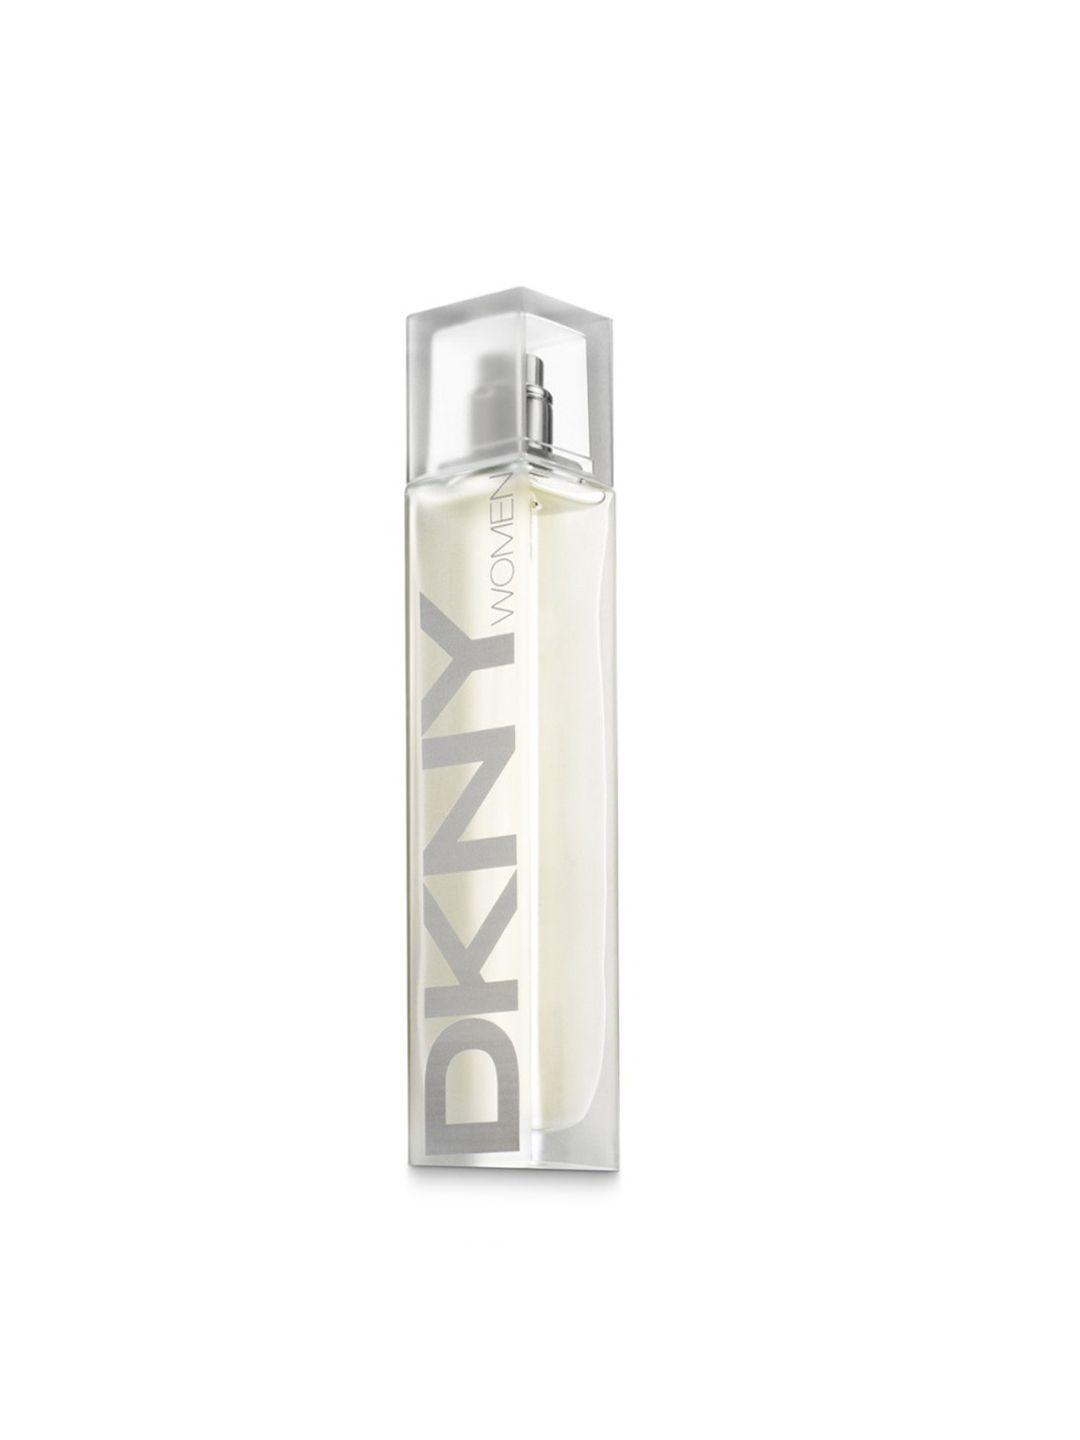 dkny women energizing eau de parfum 50 ml